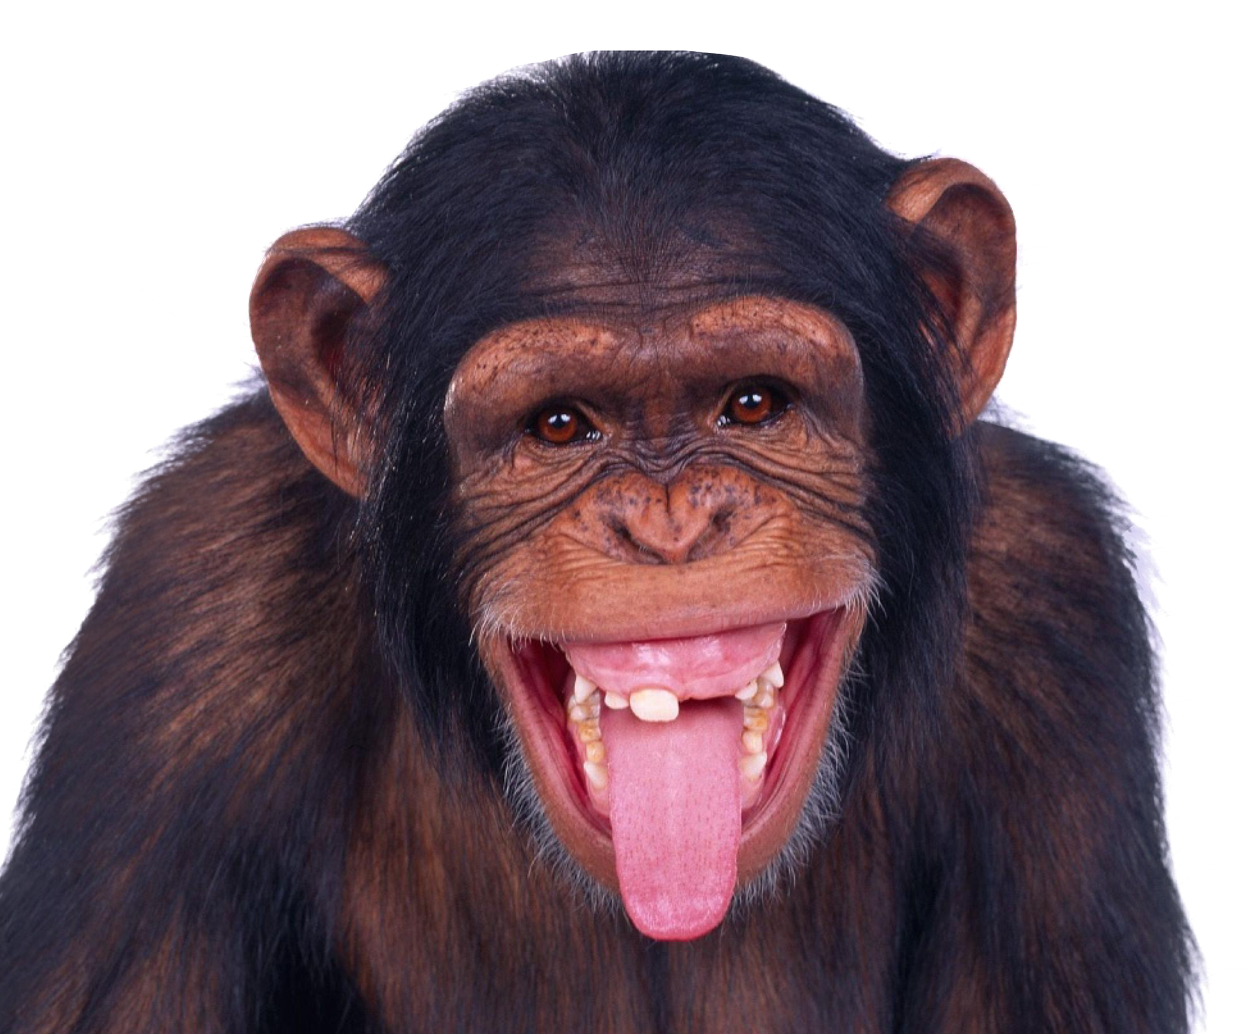 Monkey Chimpanzee Ape PNG Image High Quality PNG Image